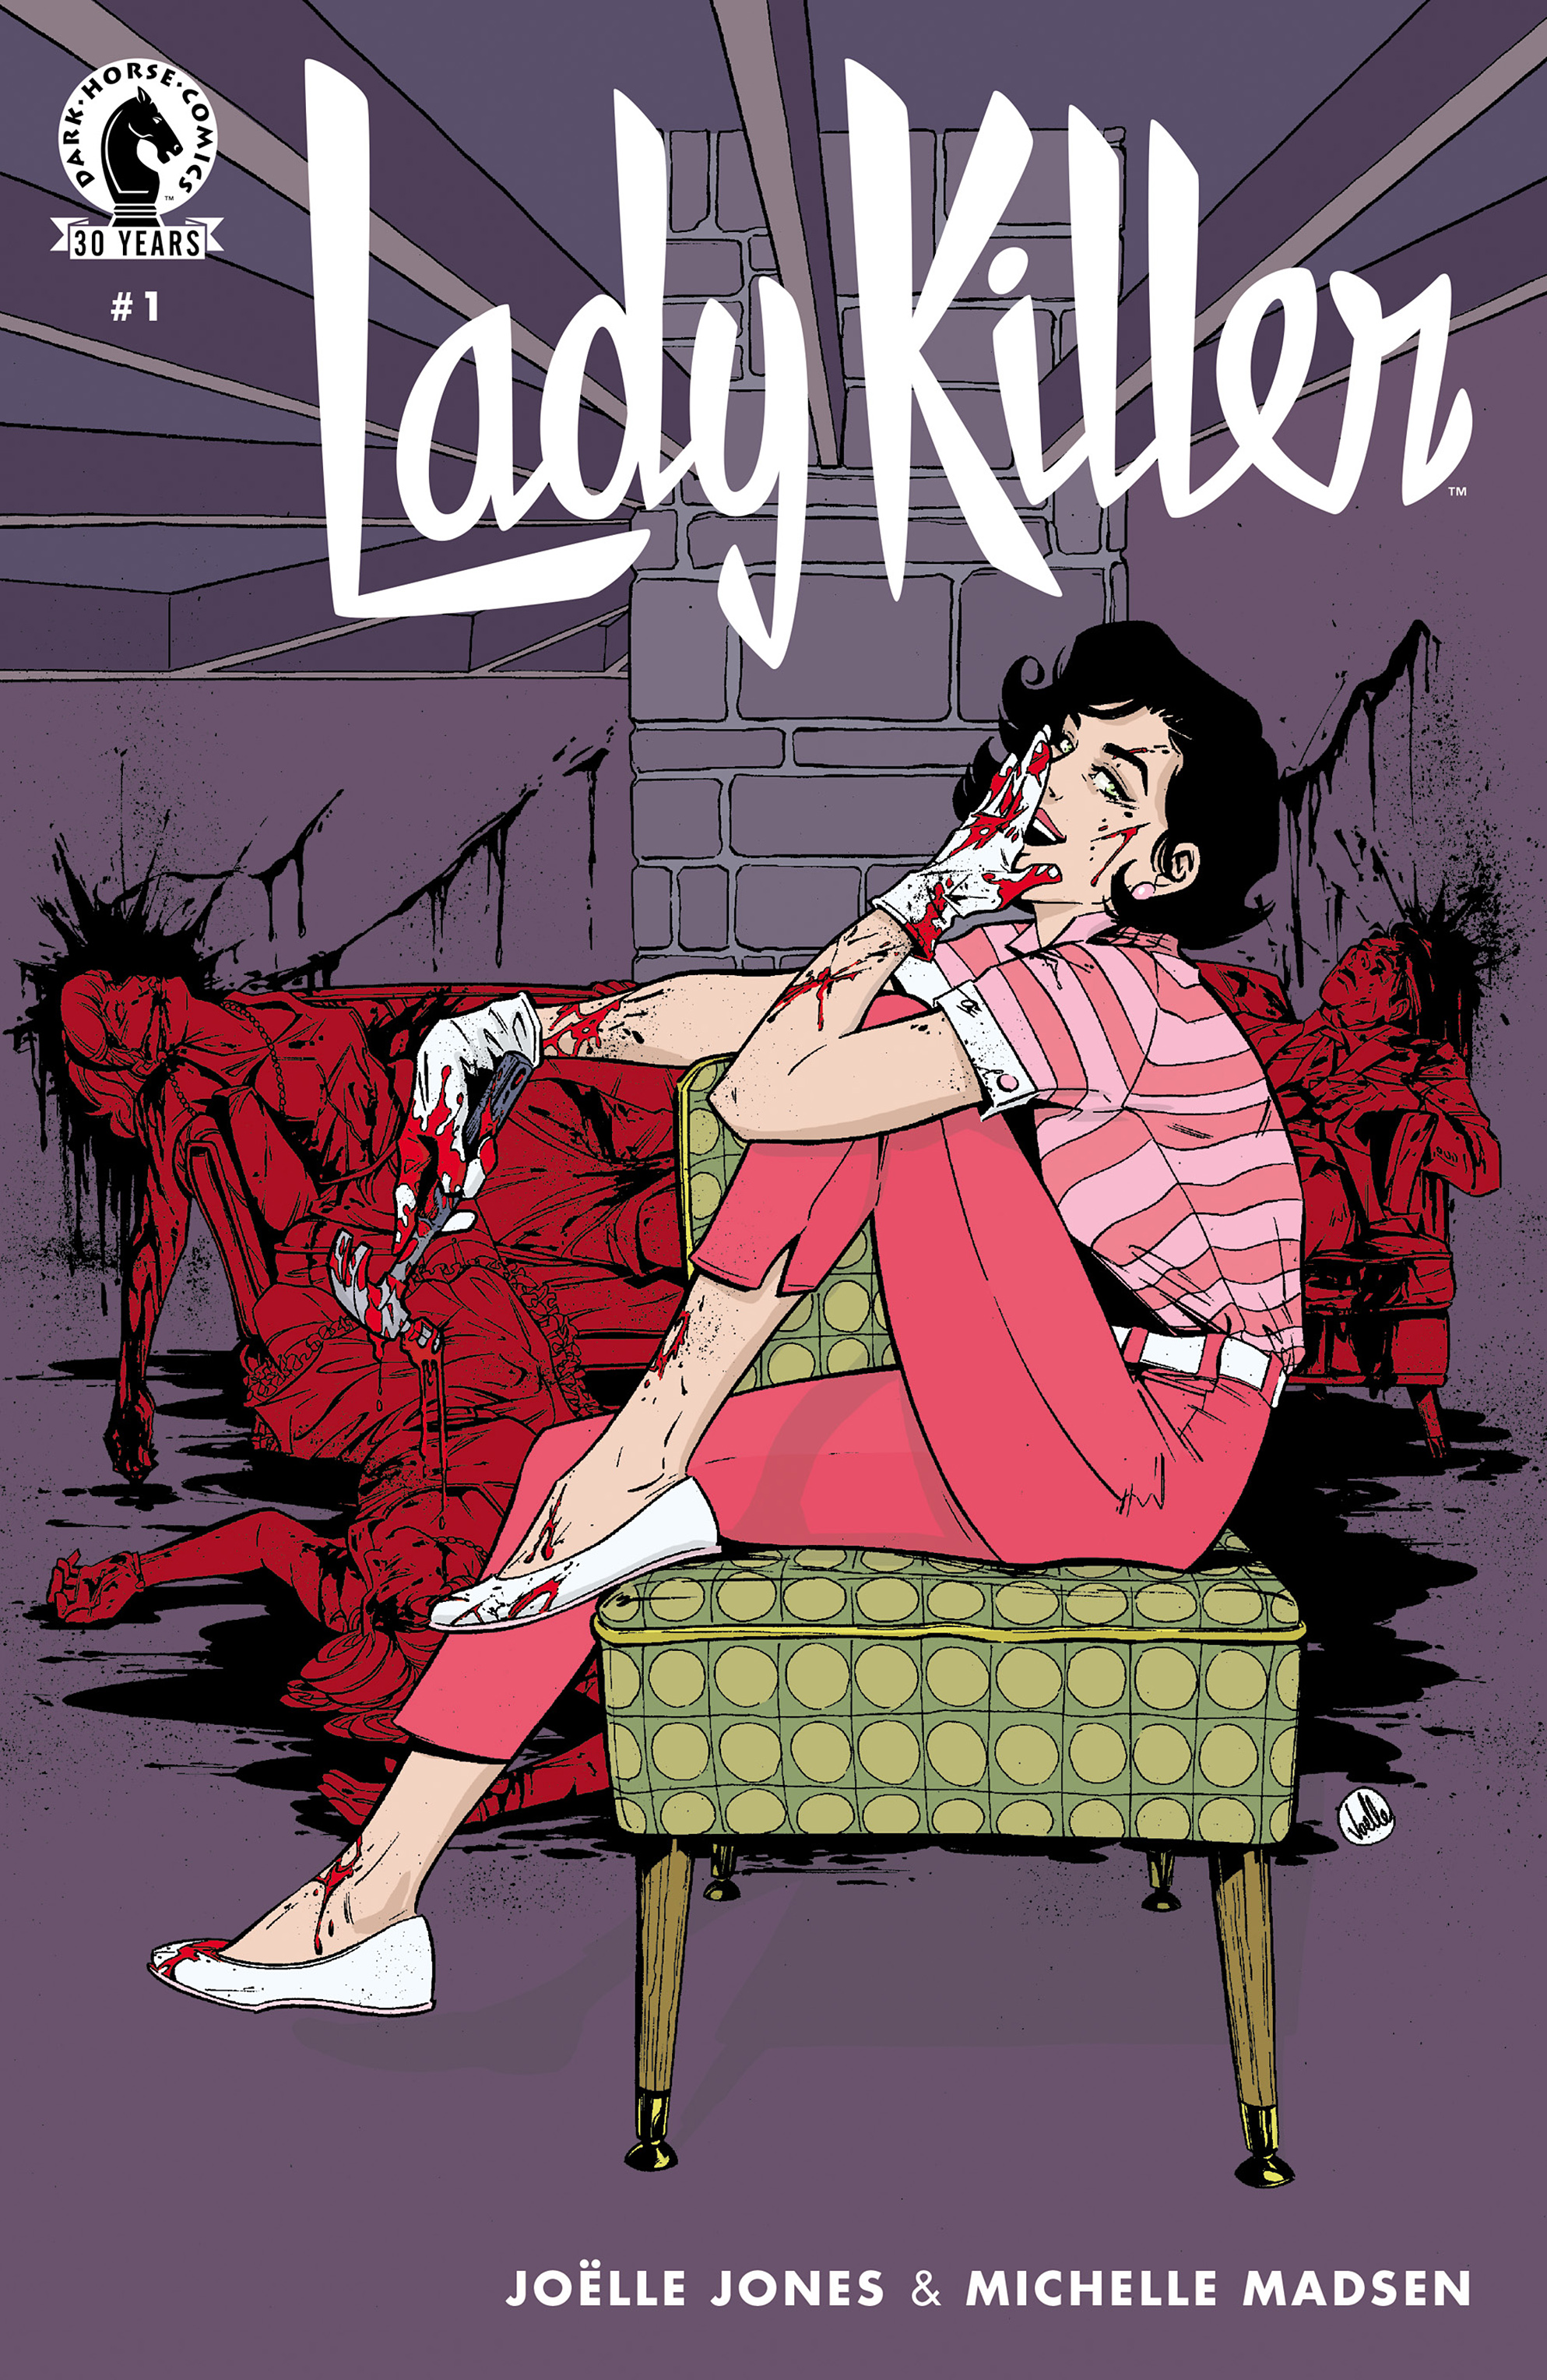 LADY KILLER #4 